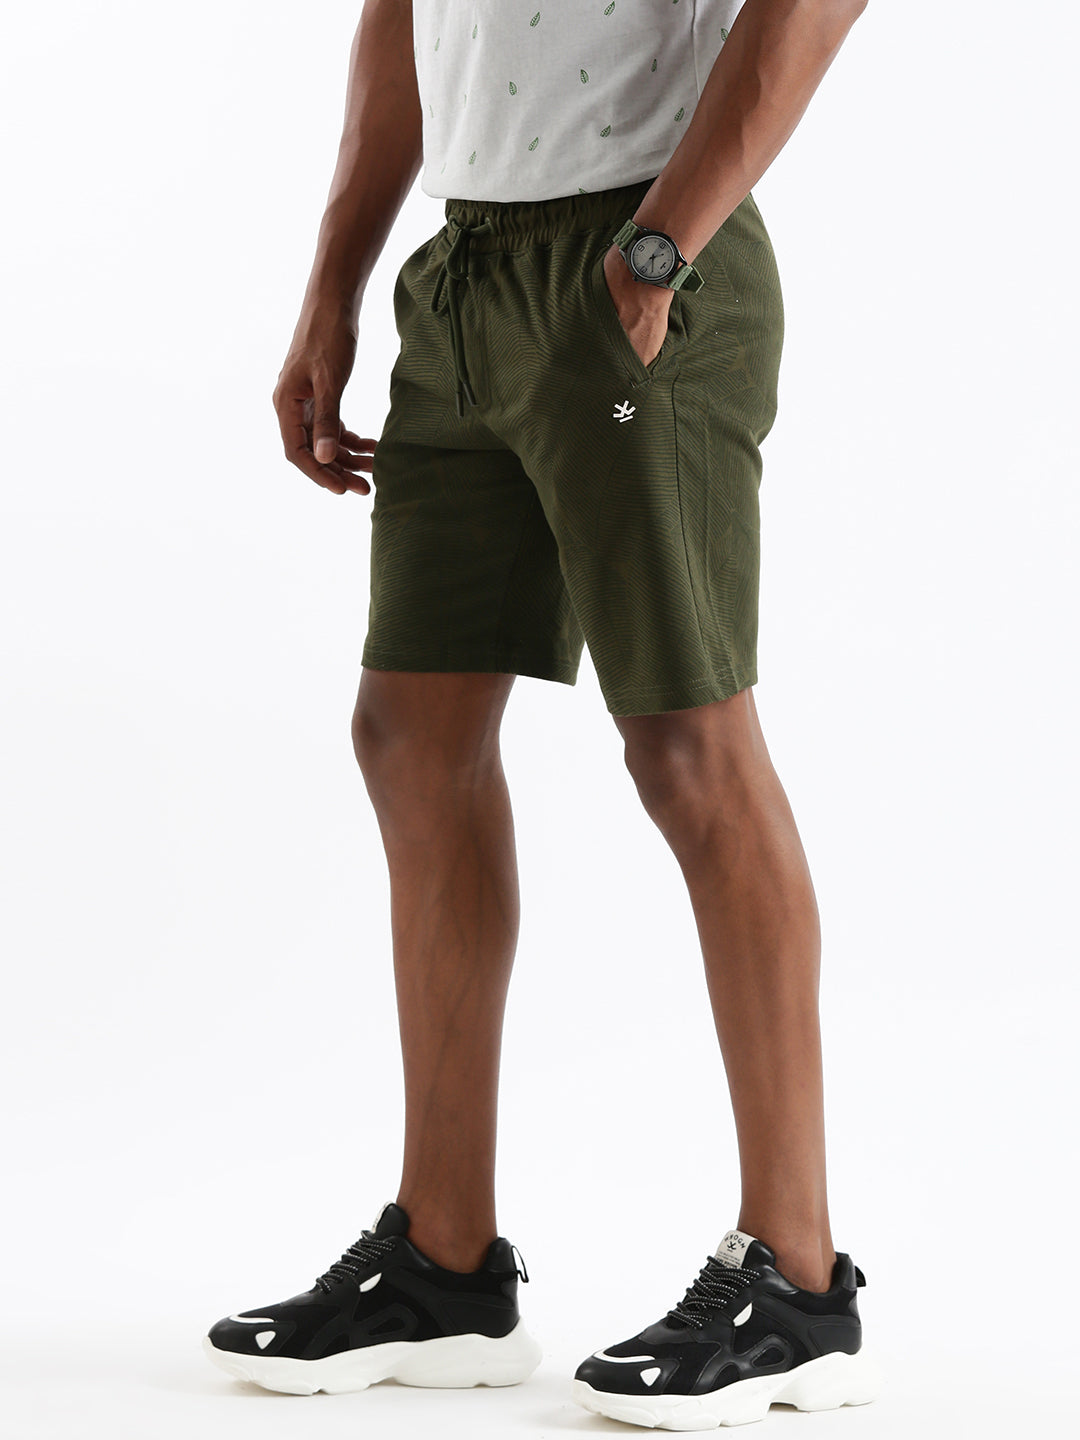 Solid Olive Comfort Shorts